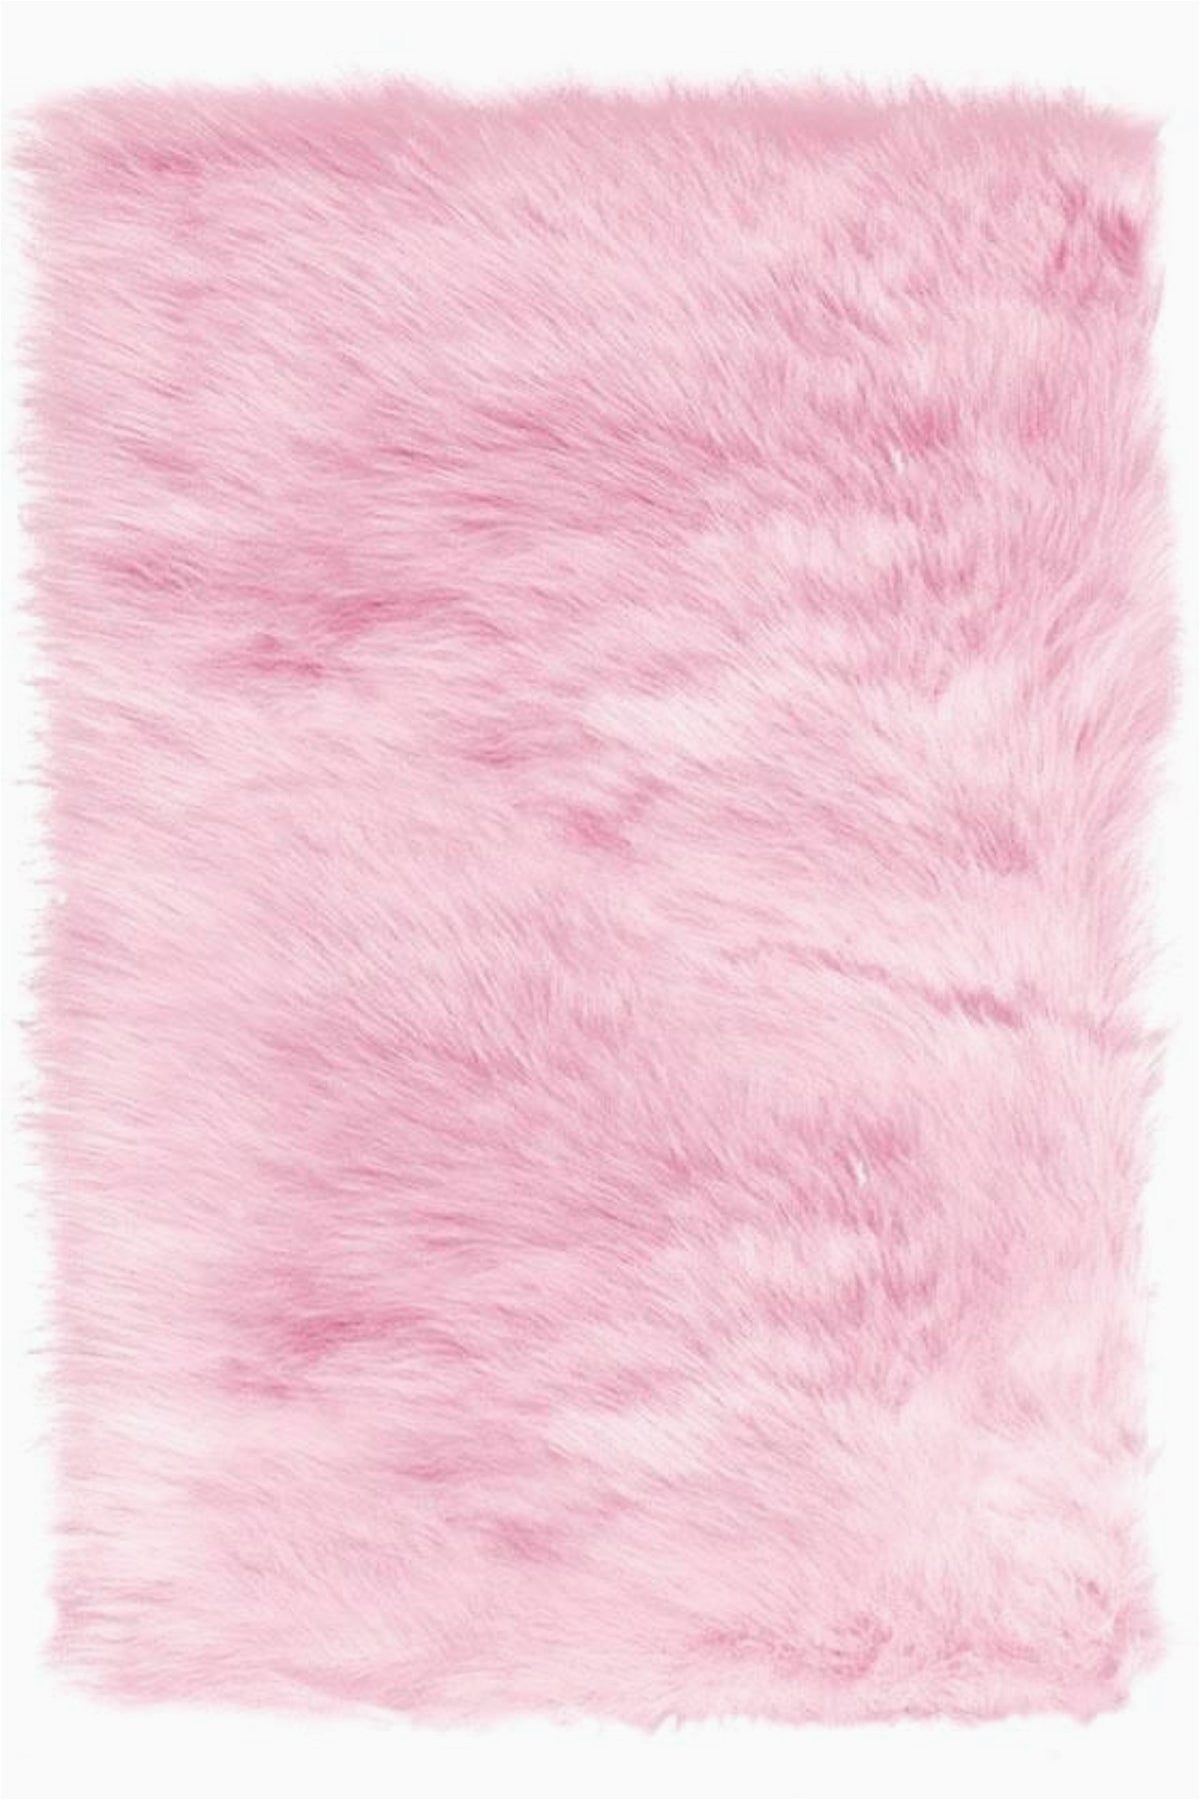 Pink Faux Fur area Rug Faux Fur Light Pink 4 X5 area Rug